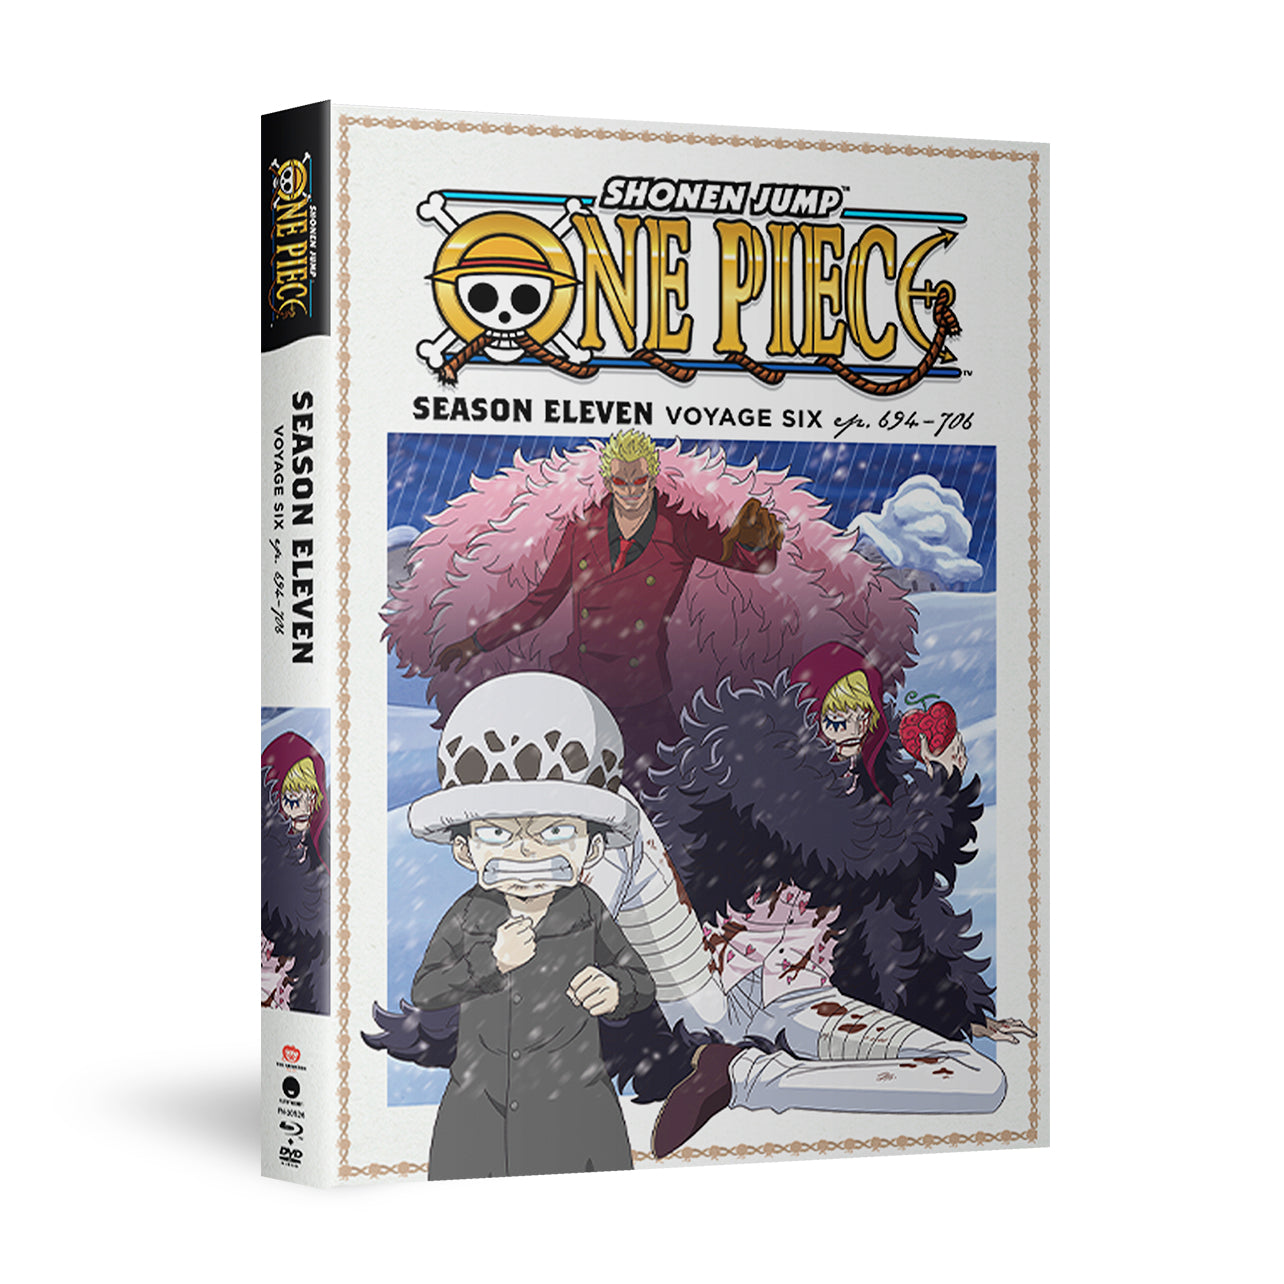 One Piece - Season 11 Voyage 6 - BD/DVD image count 1